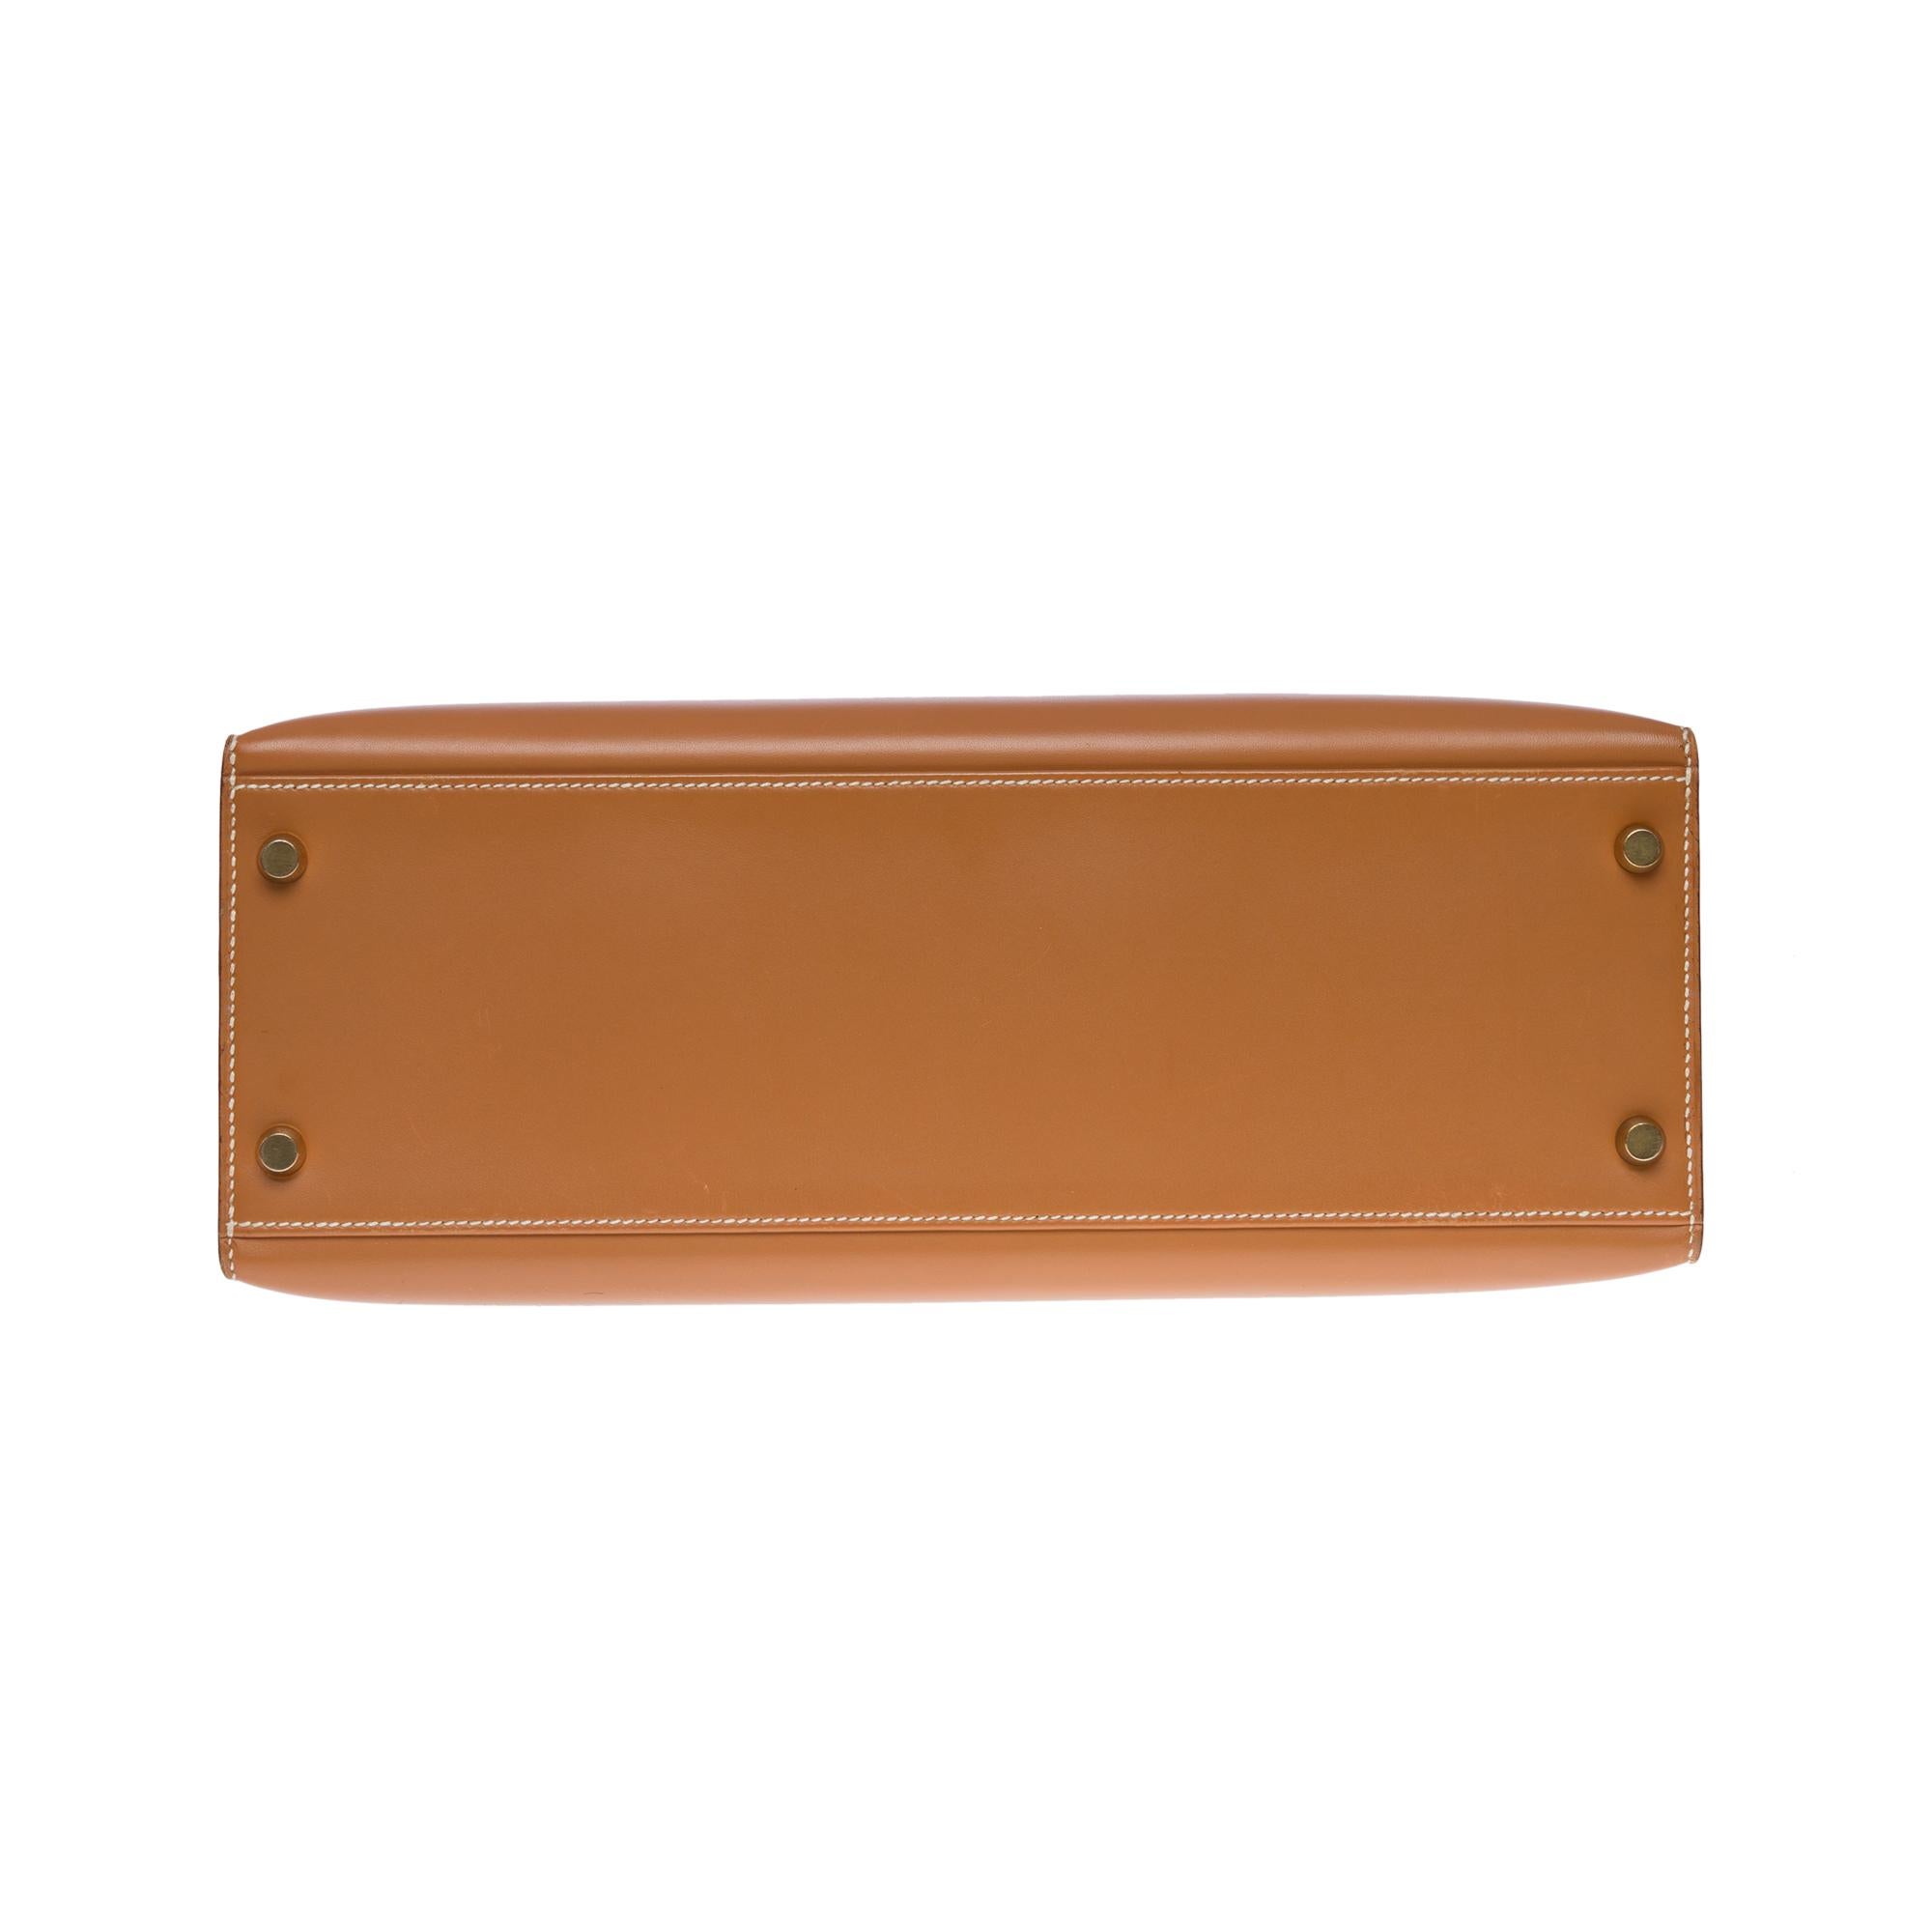 Very Rare Hermès Kelly 32 sellier handbag strap in Gold Chamonix leather , GHW 6